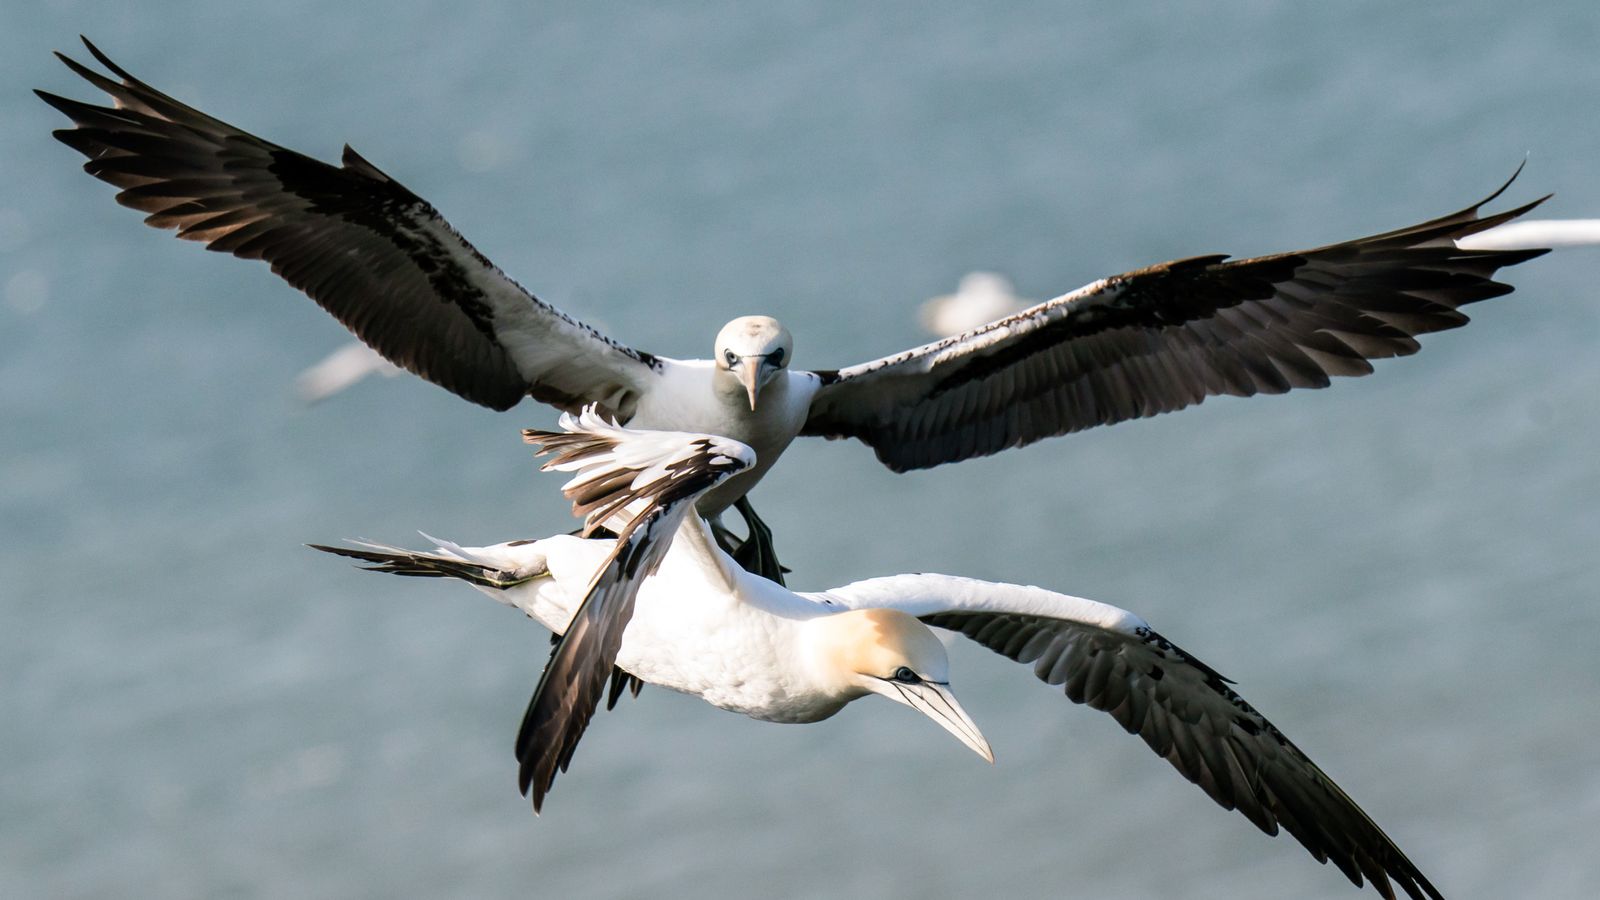 Scientists on high alert for bird flu as seabirds return to UK coast